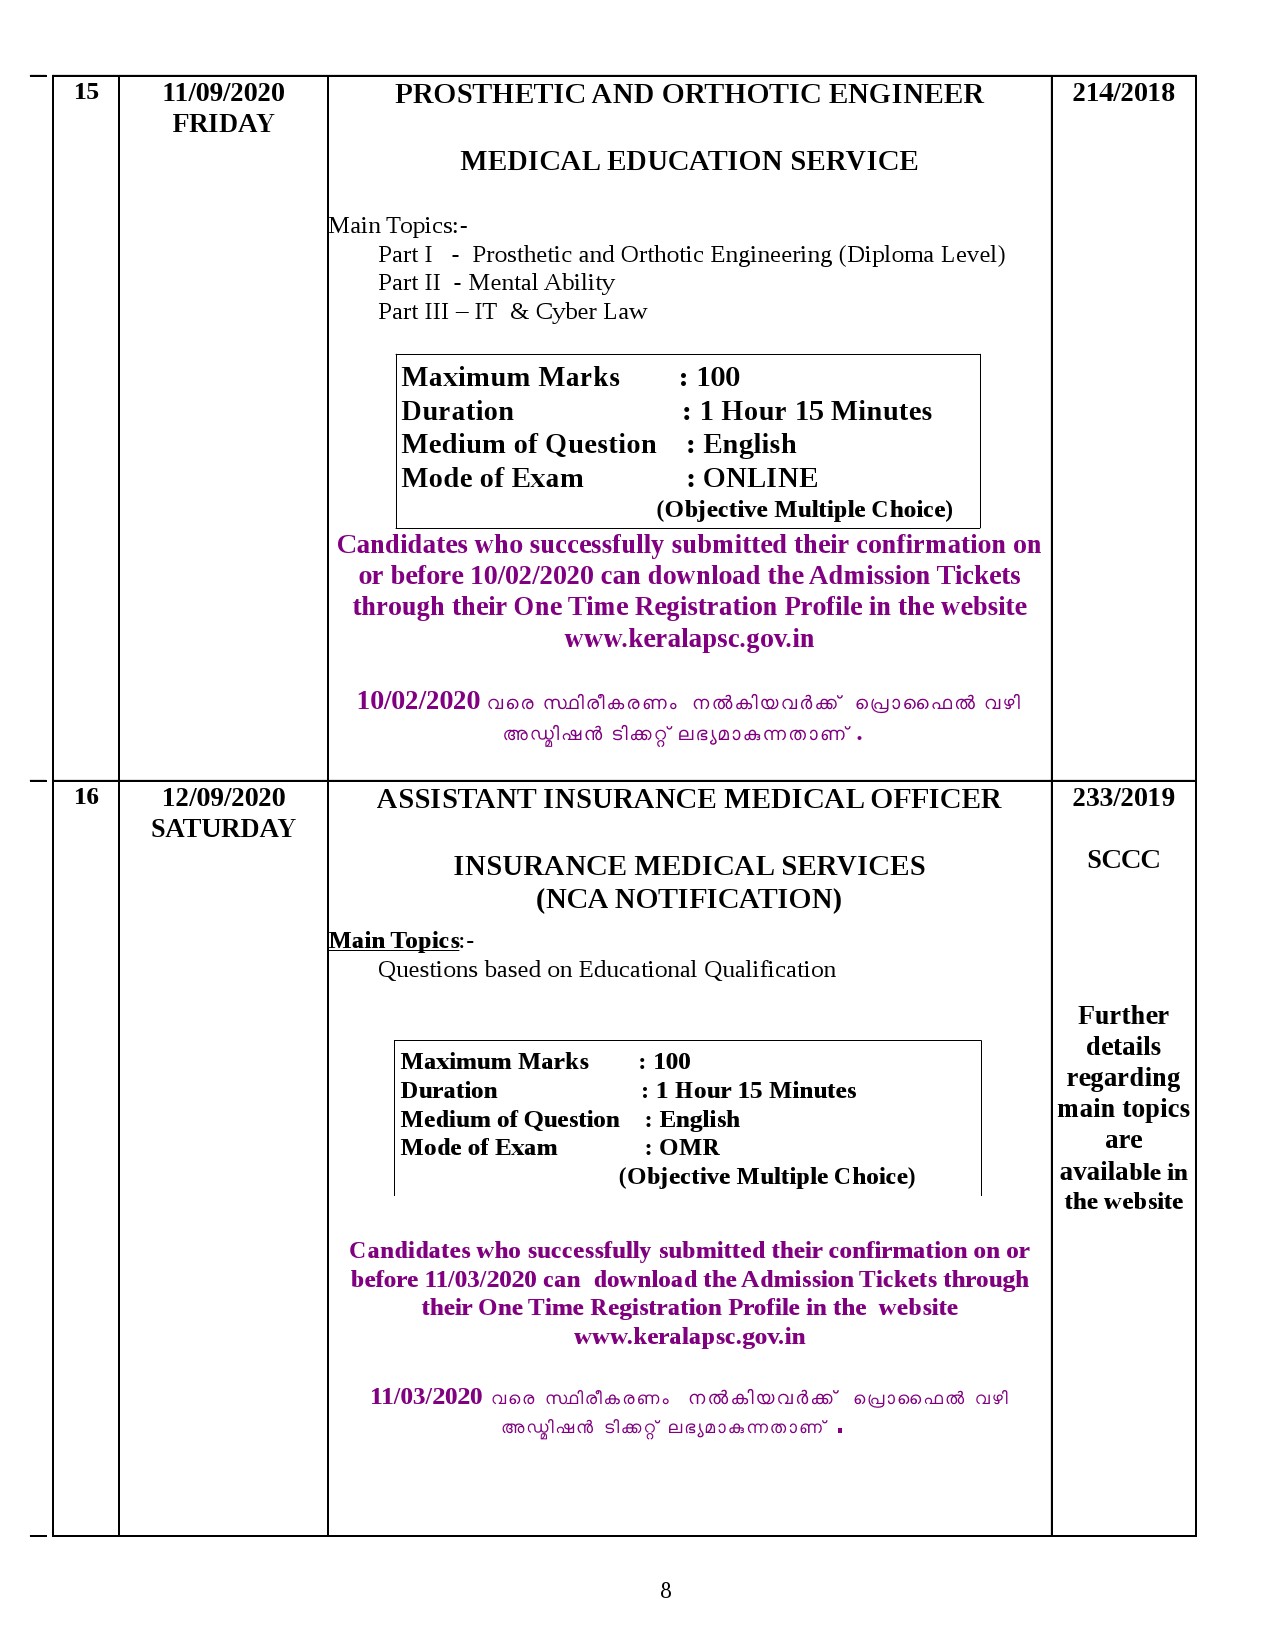 Kerala PSC Exam Calendar September 2020 - Notification Image 8